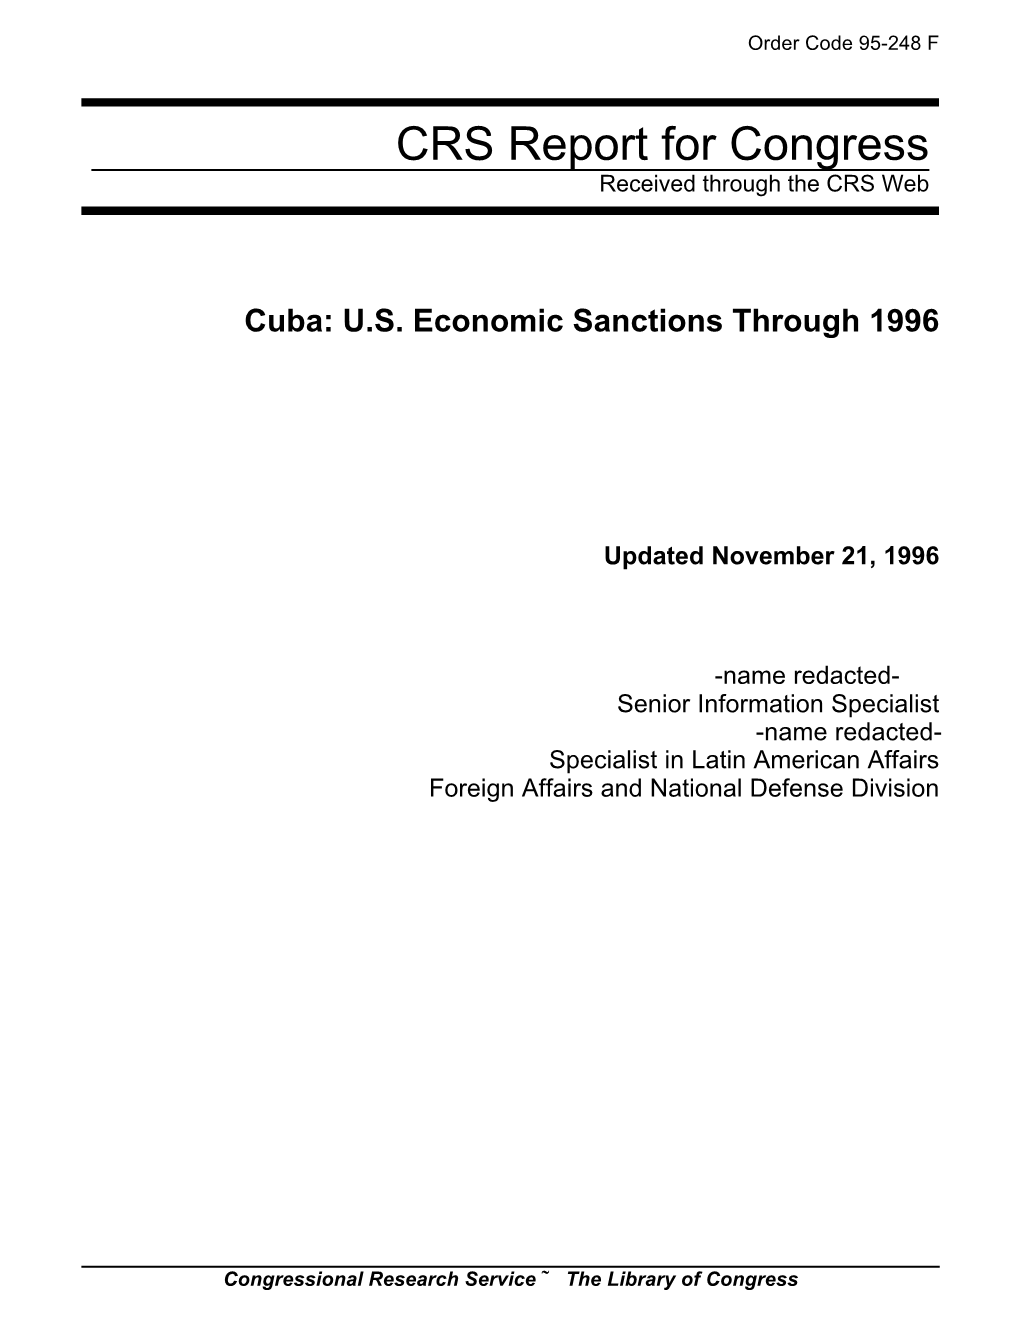 US Economic Sanctions Through 1996